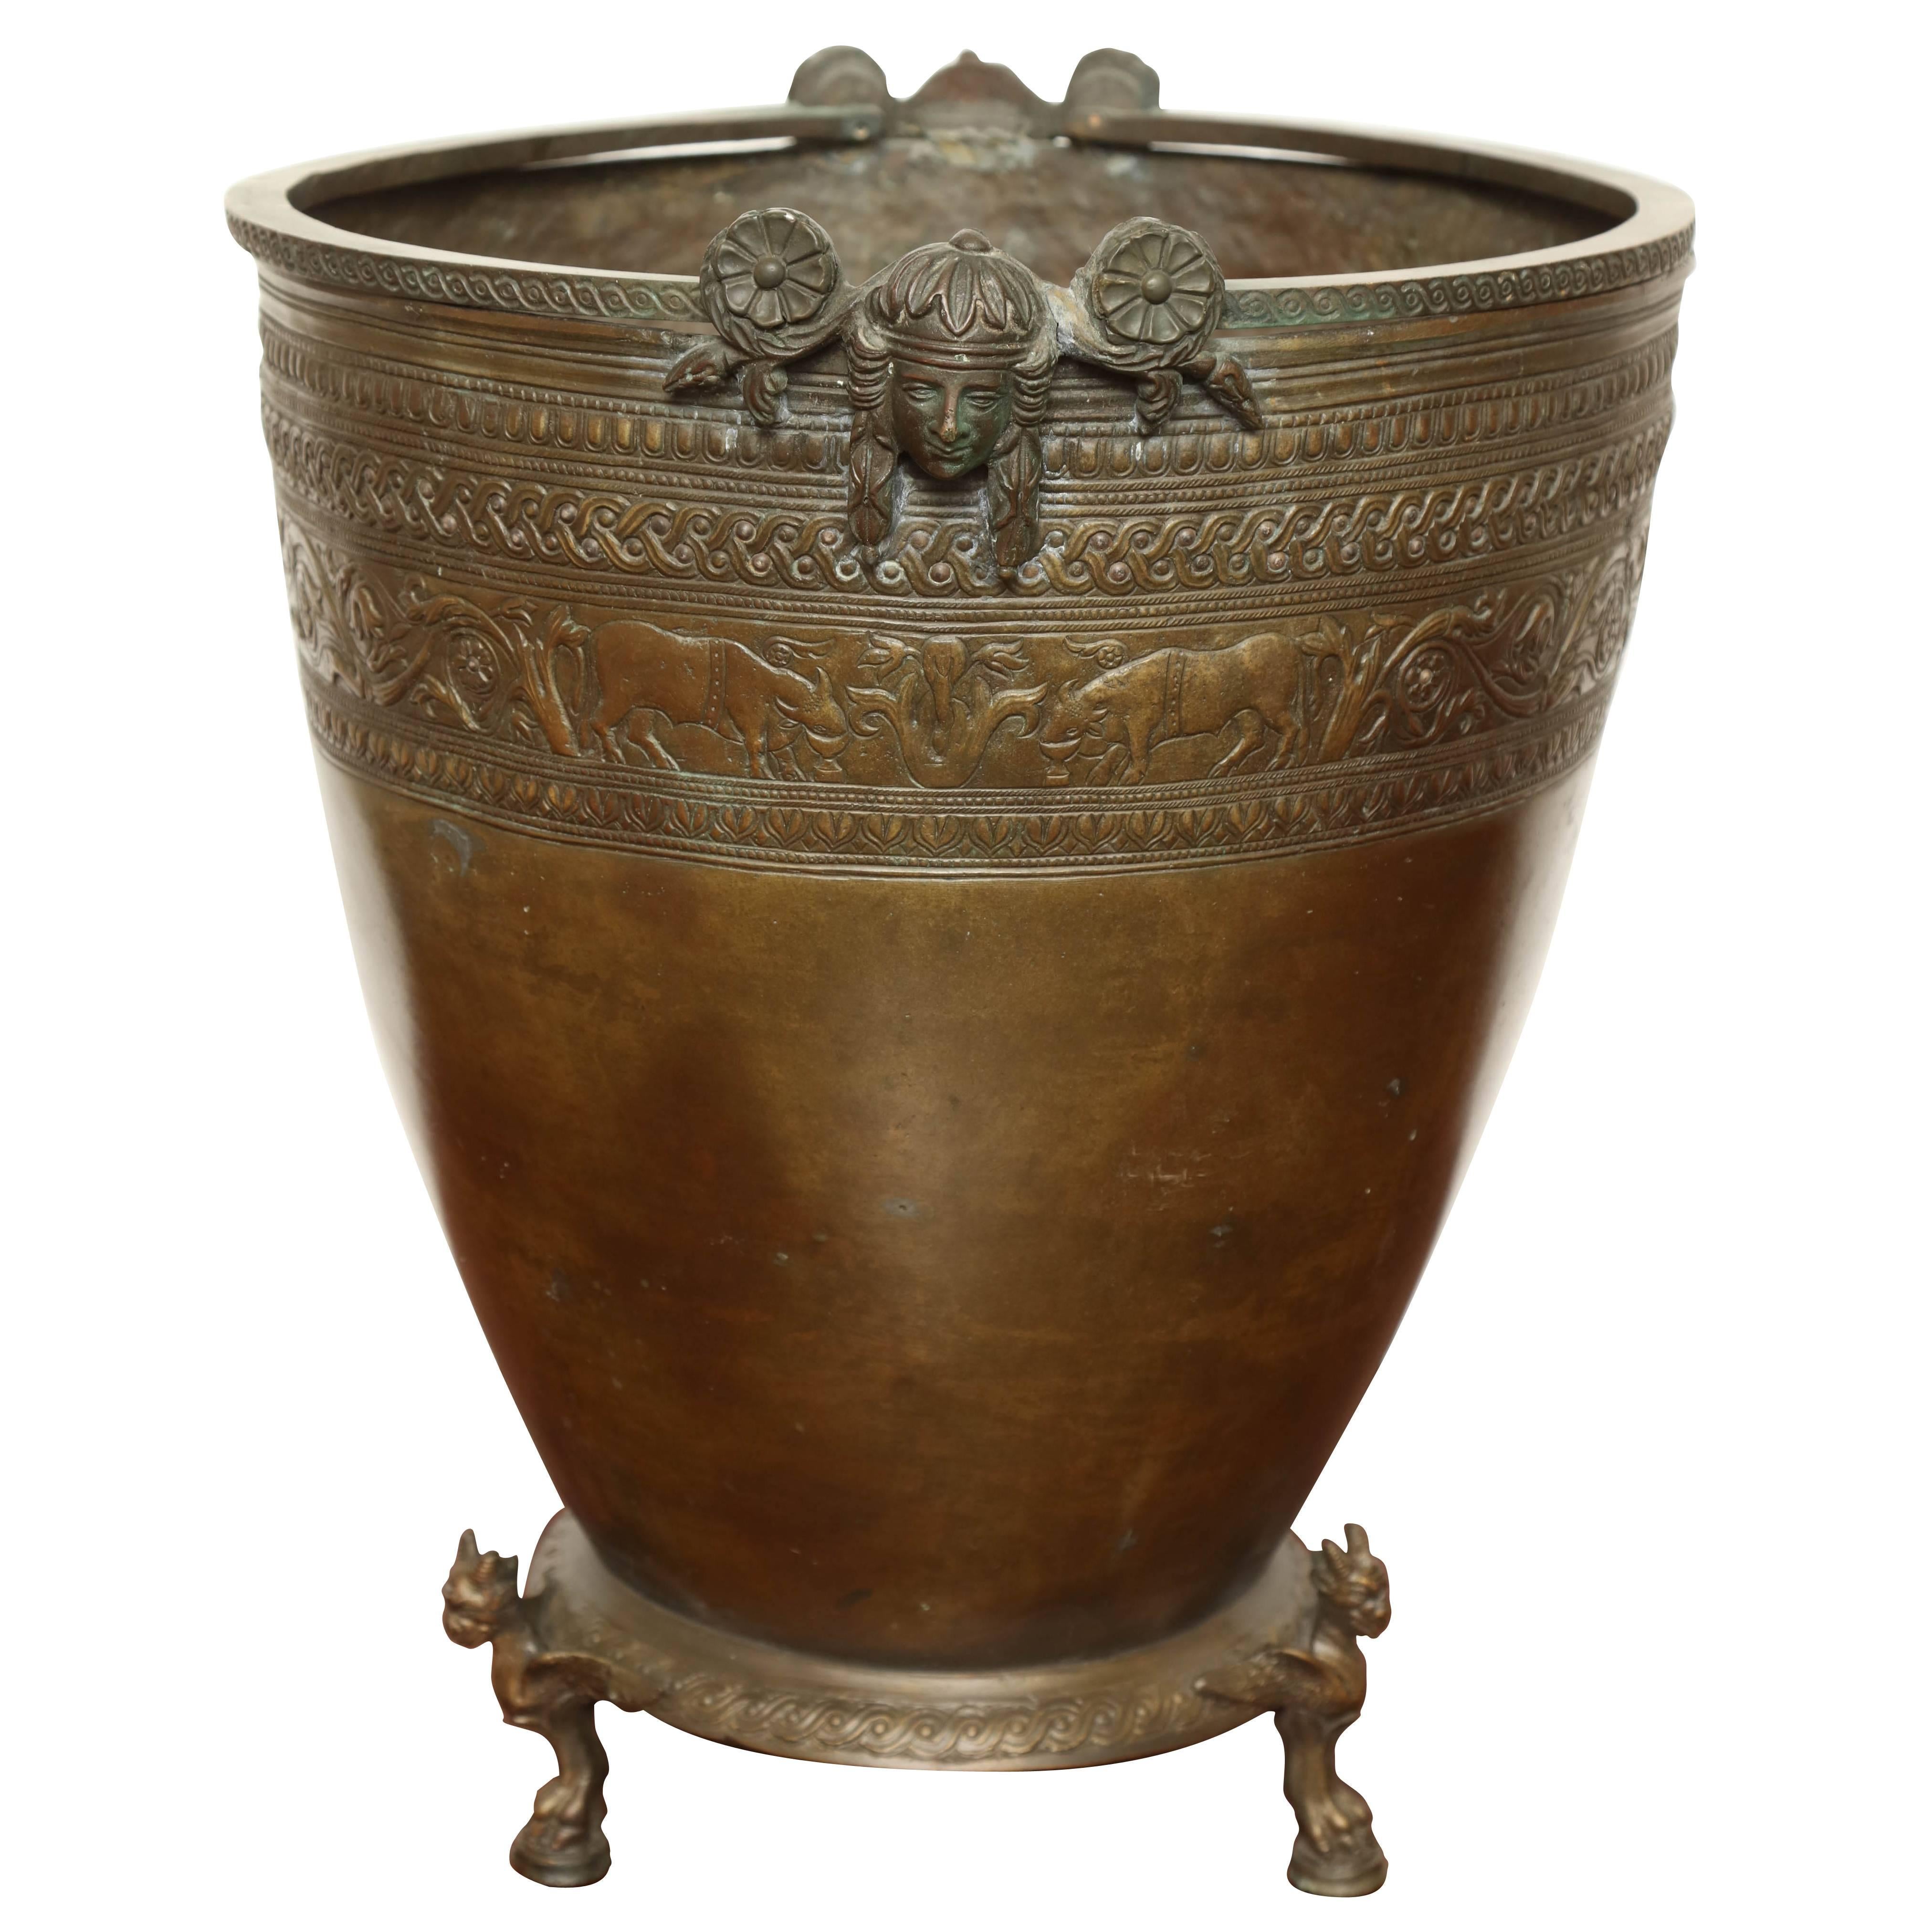 Late 19th century Italian neoclassical bucket by Chiurazzi & Fils, Naples,
Copy of Pompeian artifact.